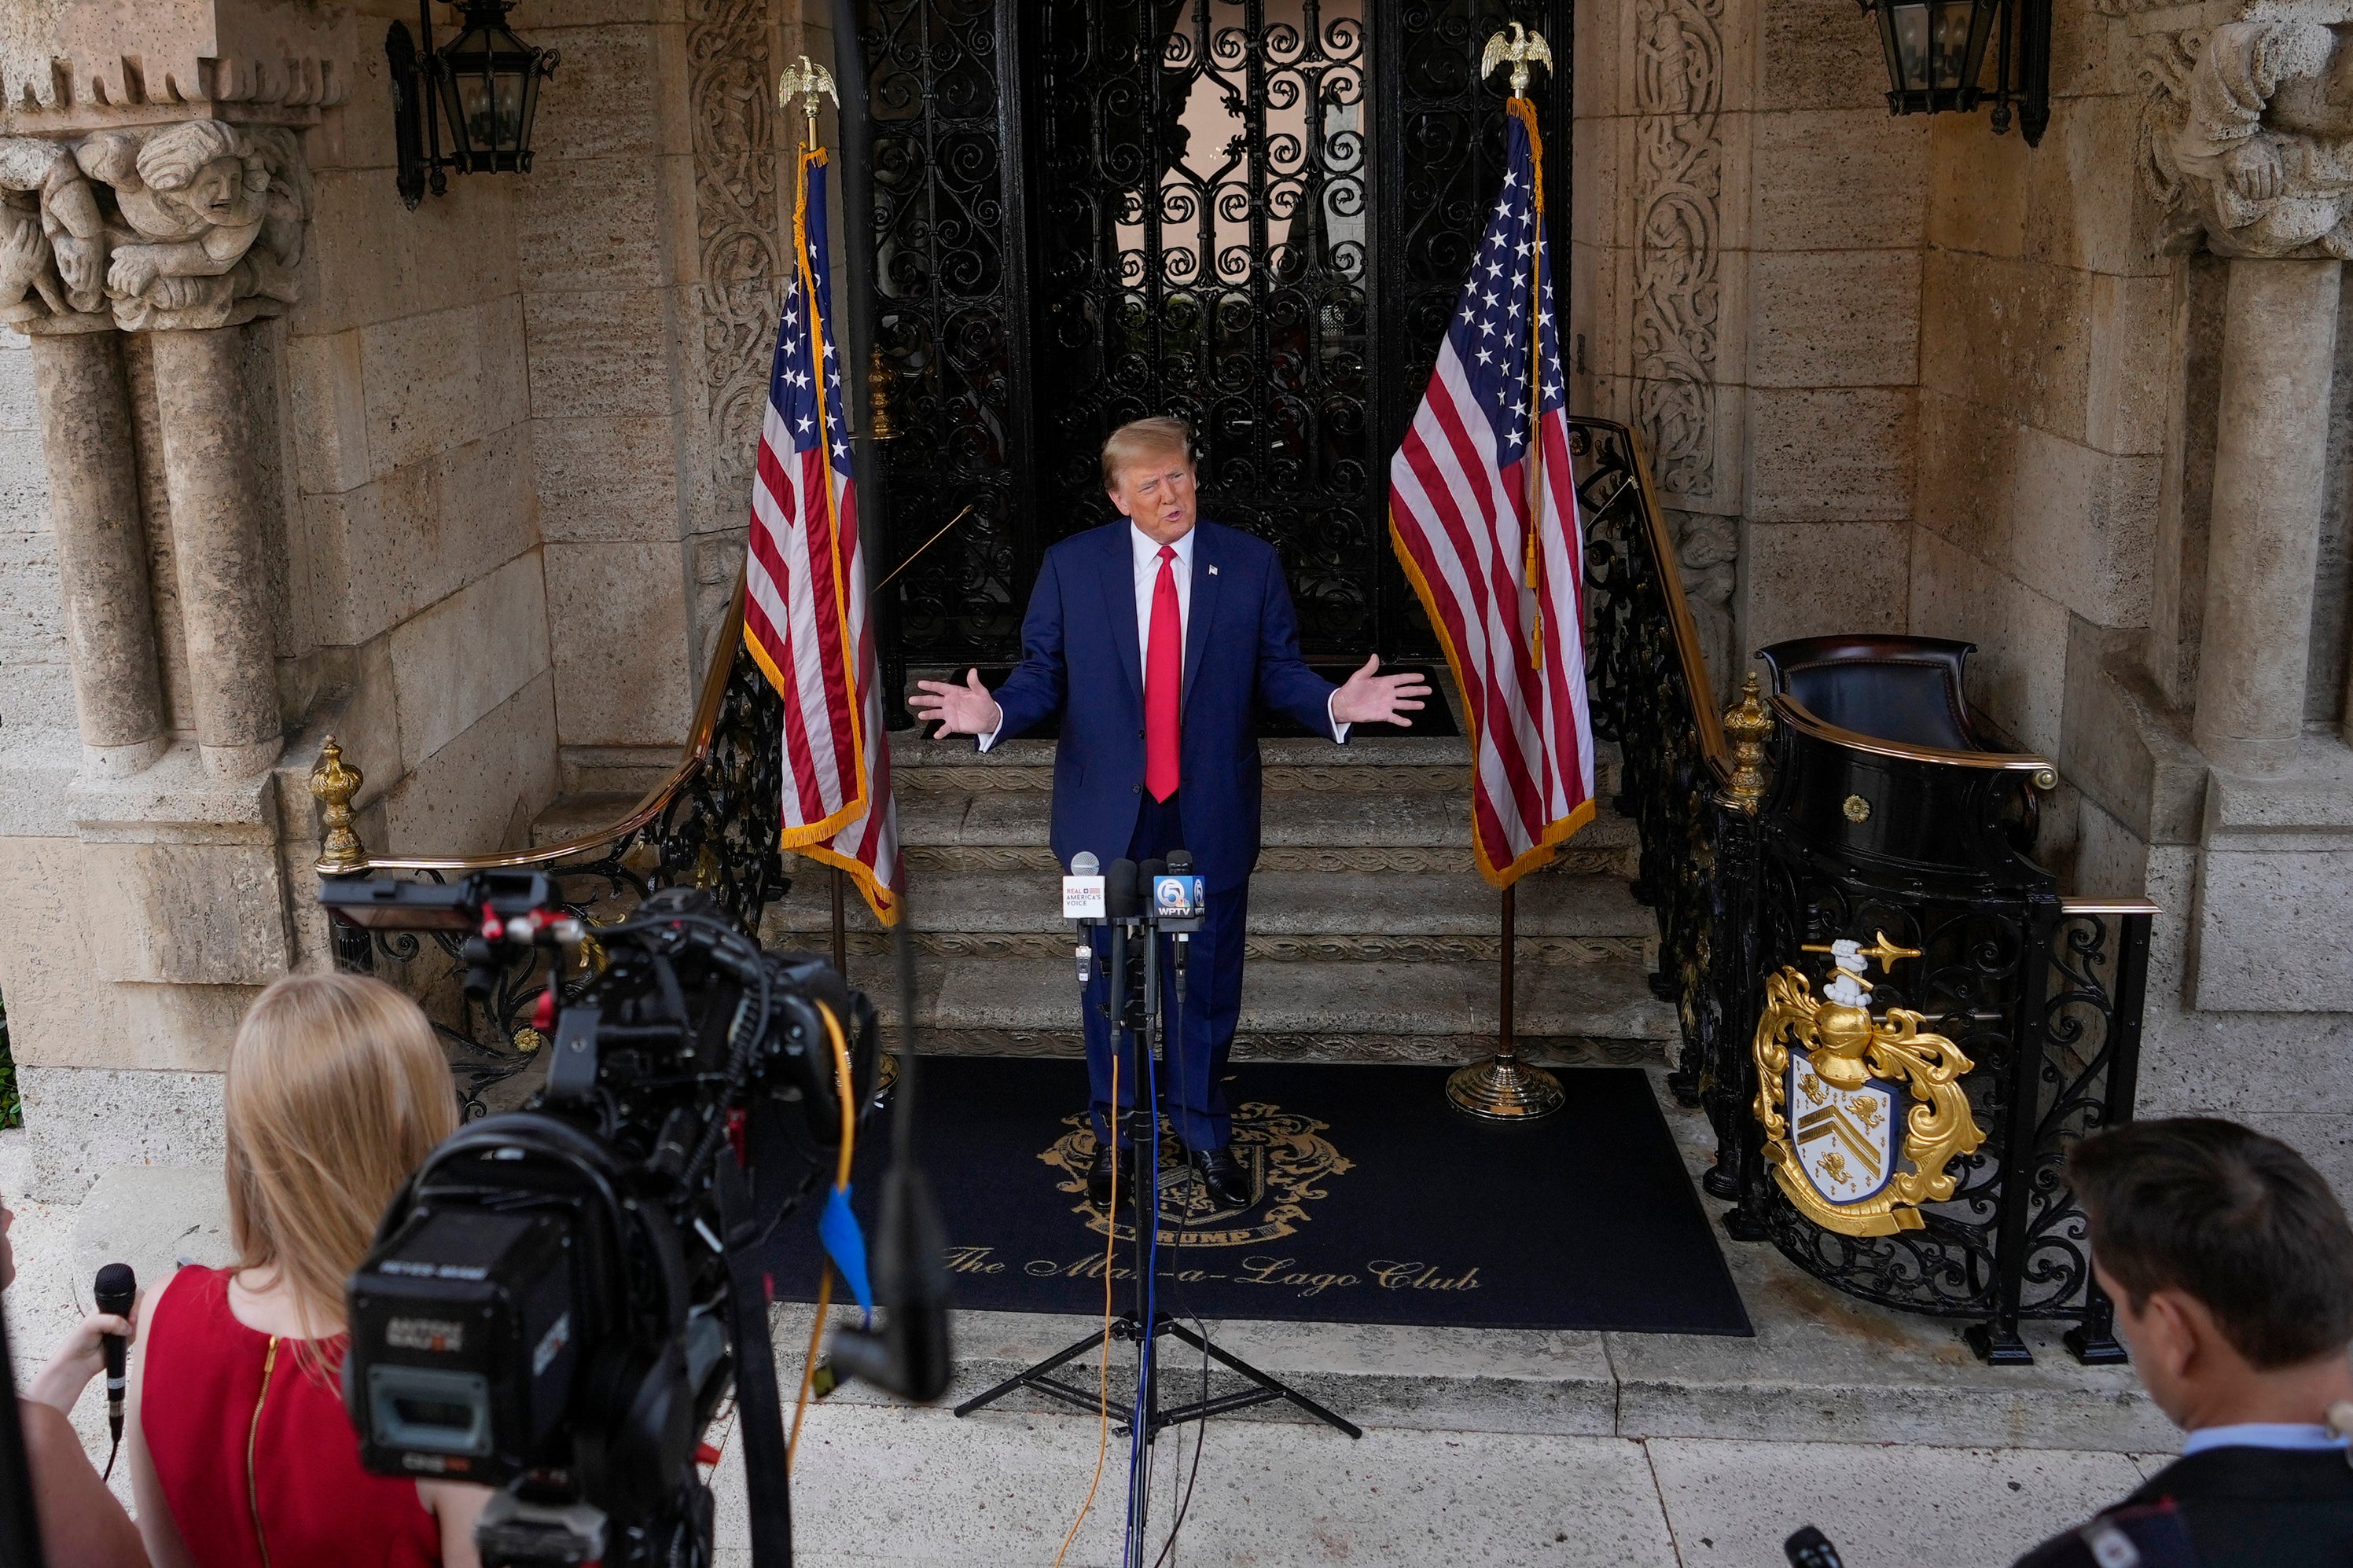 Trump speaks at his Mar-a-Lago estate on Thursday